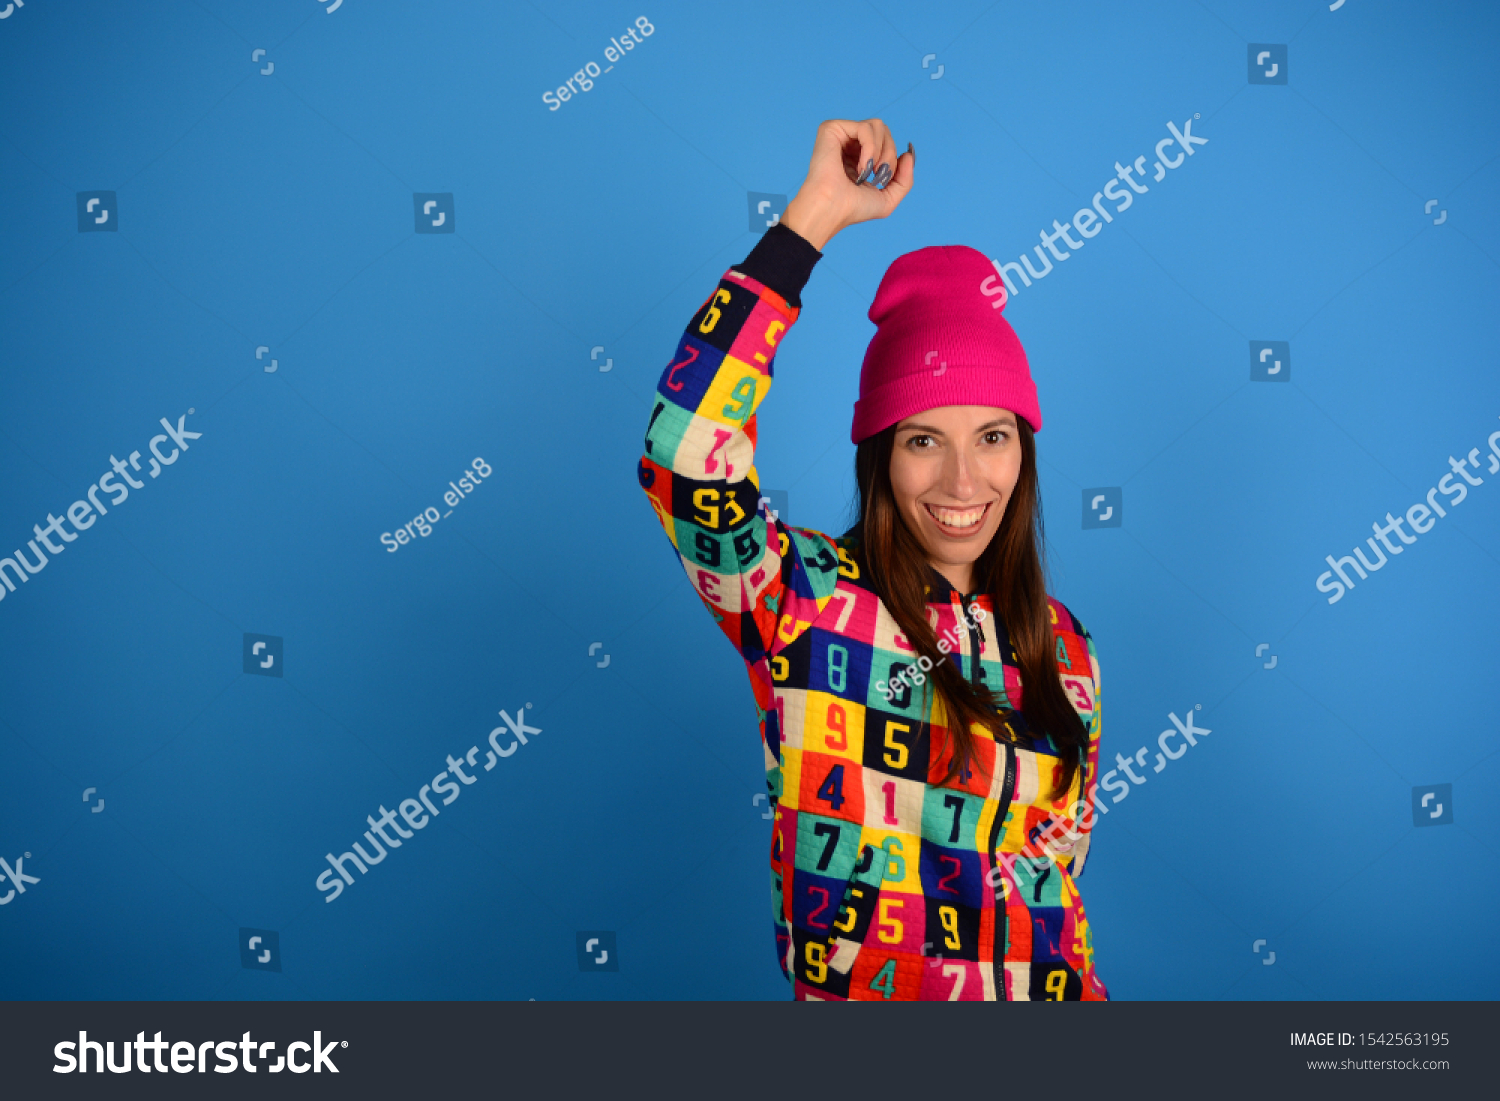 woman joyful young cheerful joy on blue background fashion style #1542563195